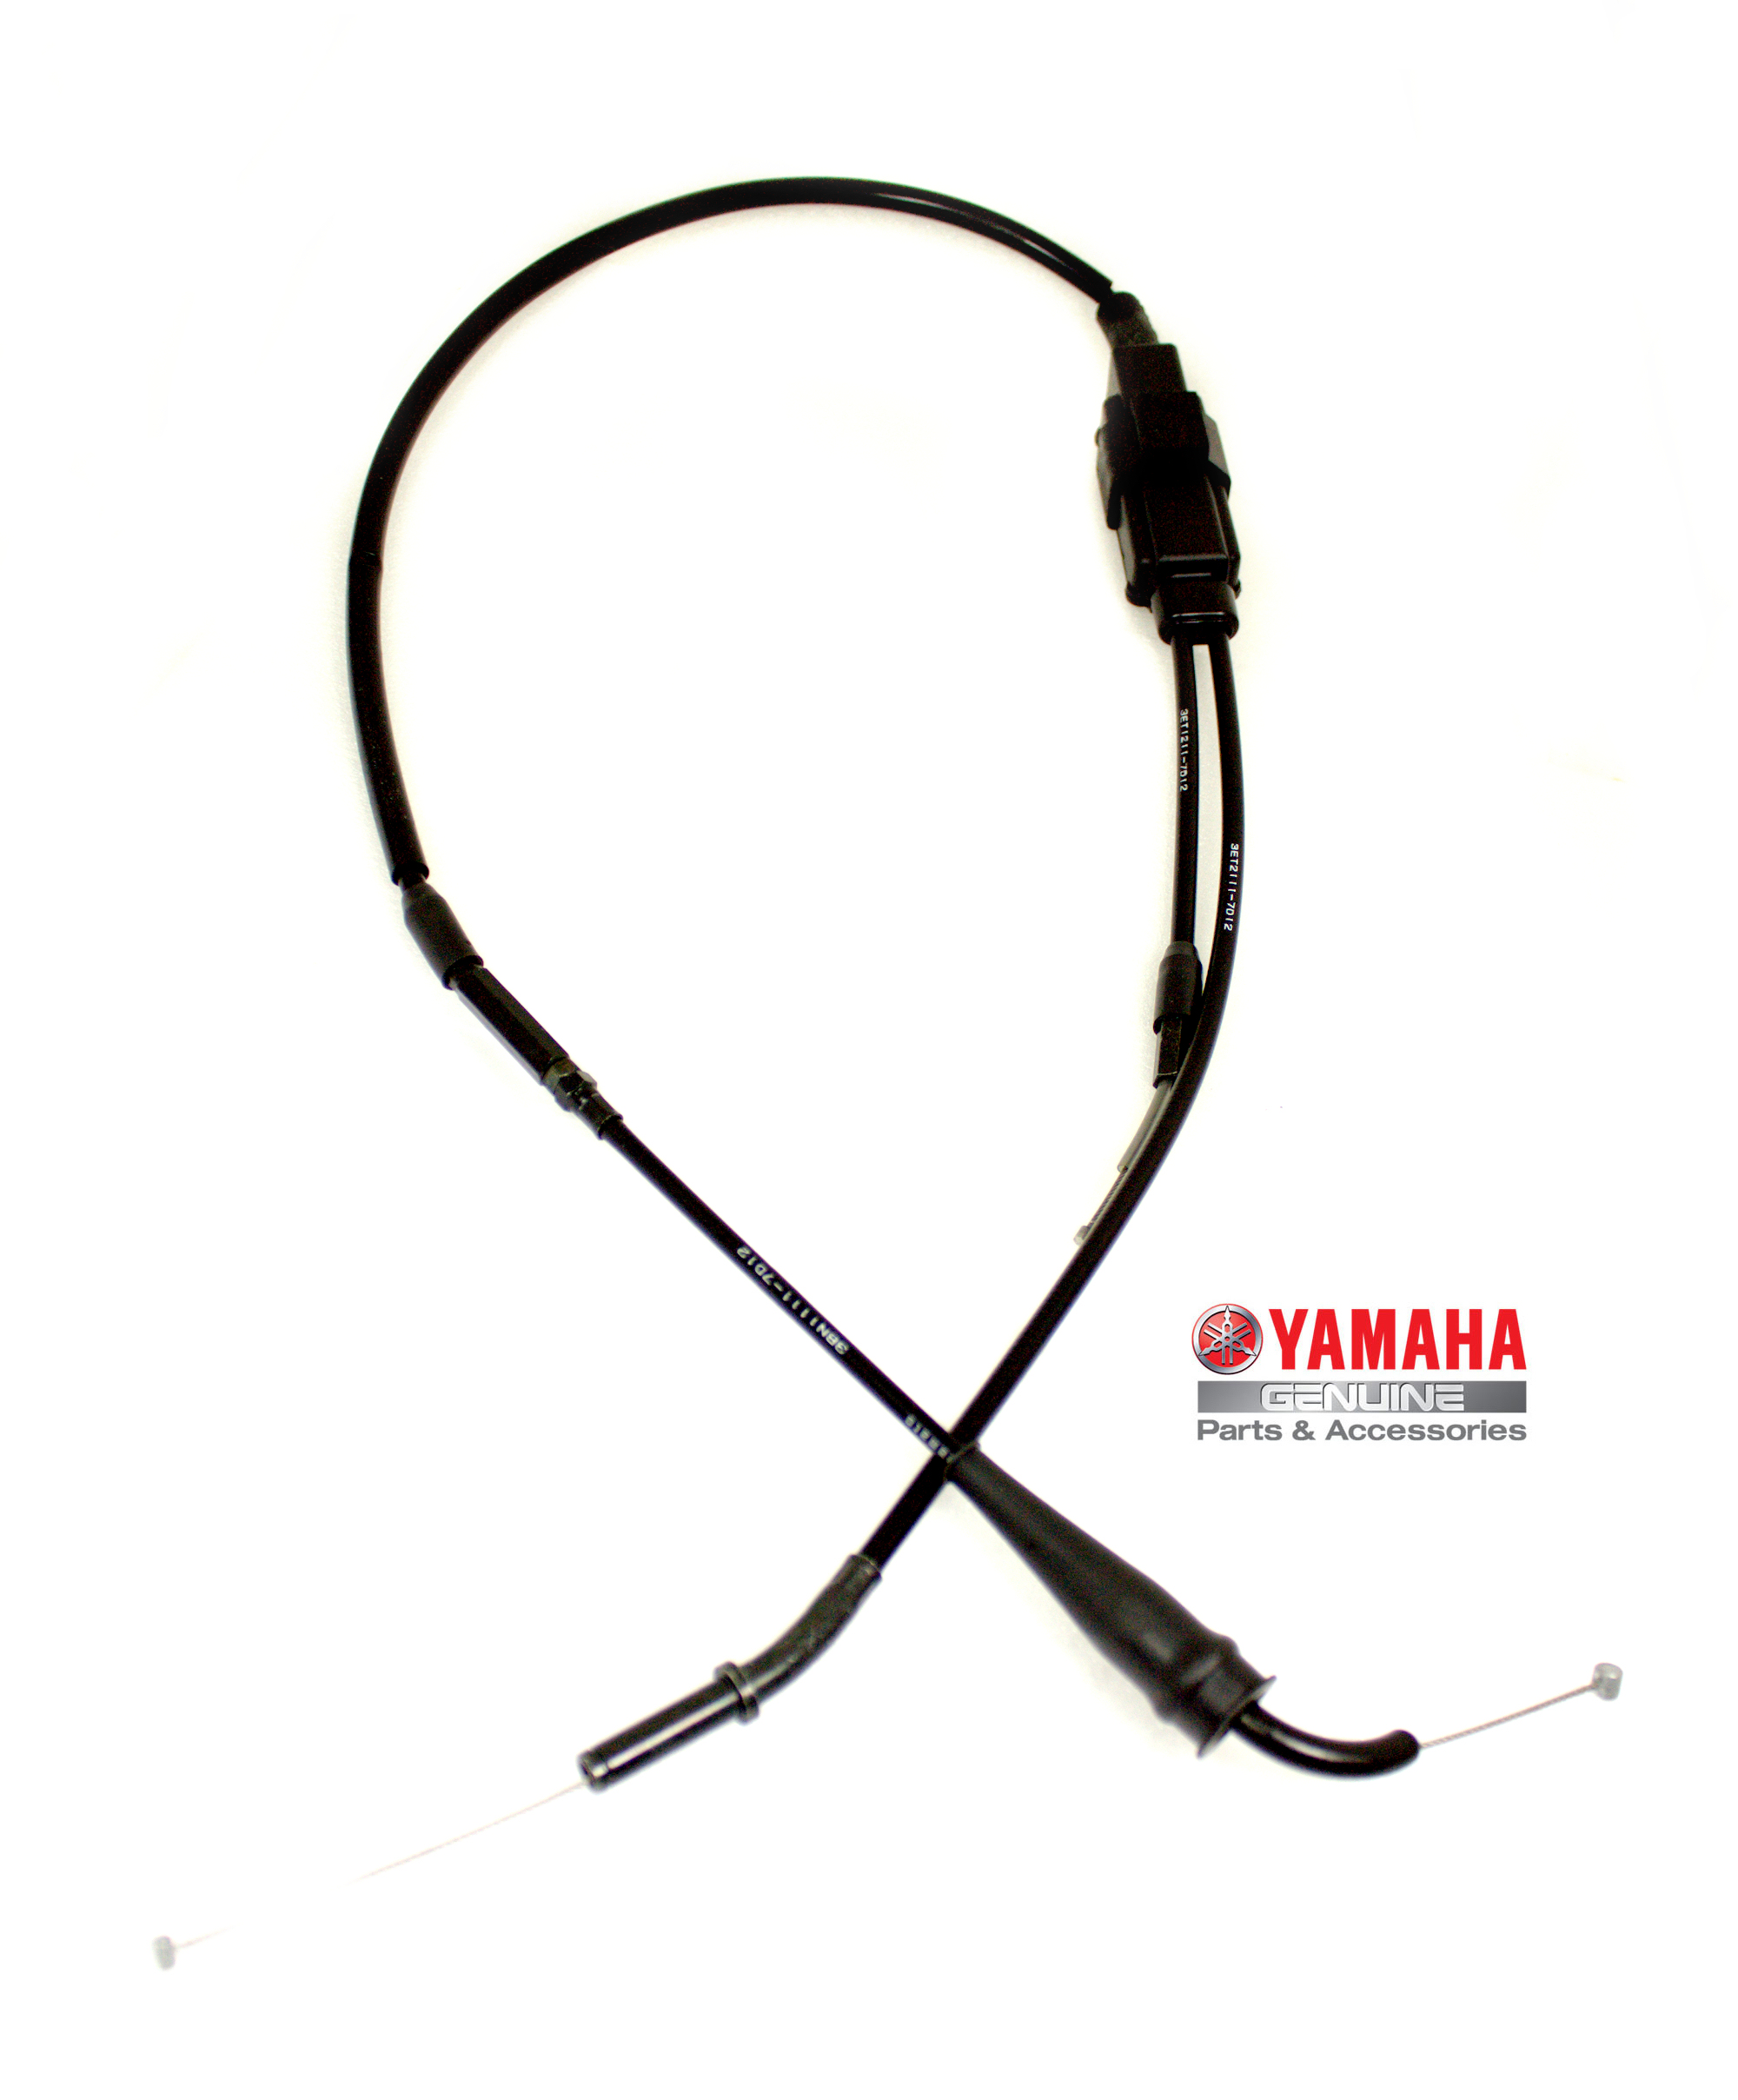 DT125R Throttle Cable 88-98 Genuine Yamaha 